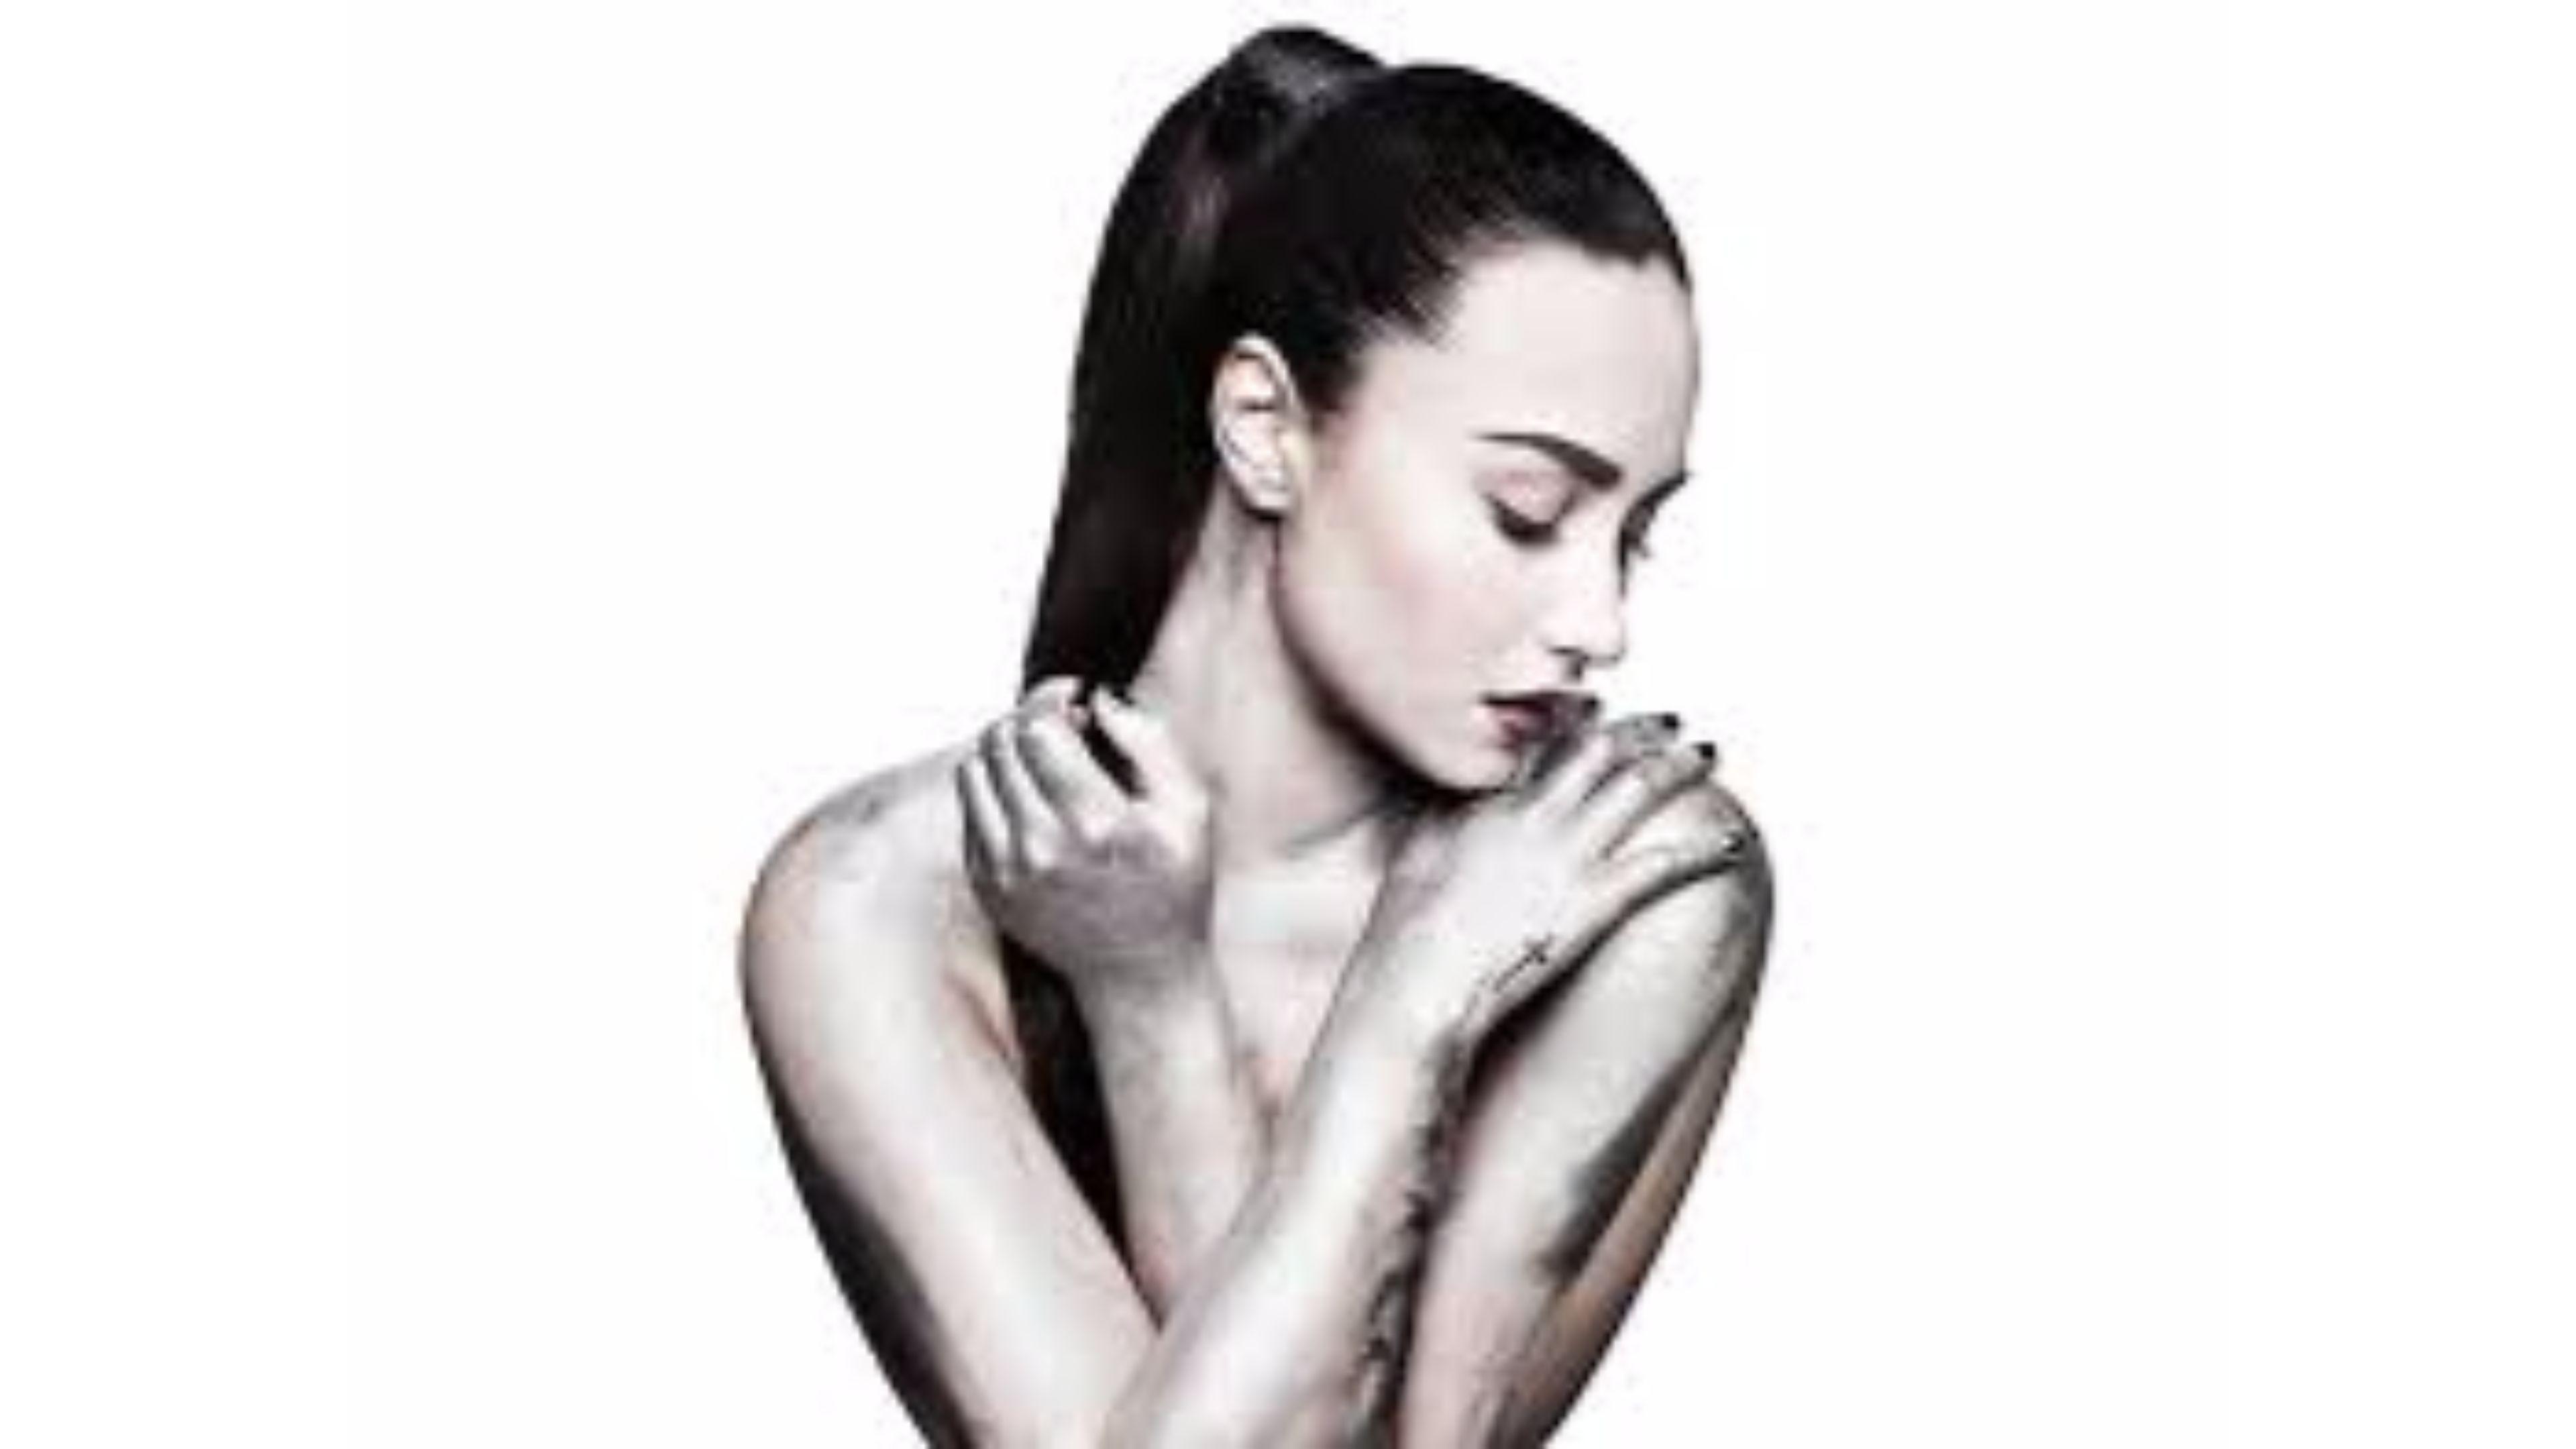 Amazing 2016 Demi Lovato 4K Wallpaper. Free 4K Wallpaper